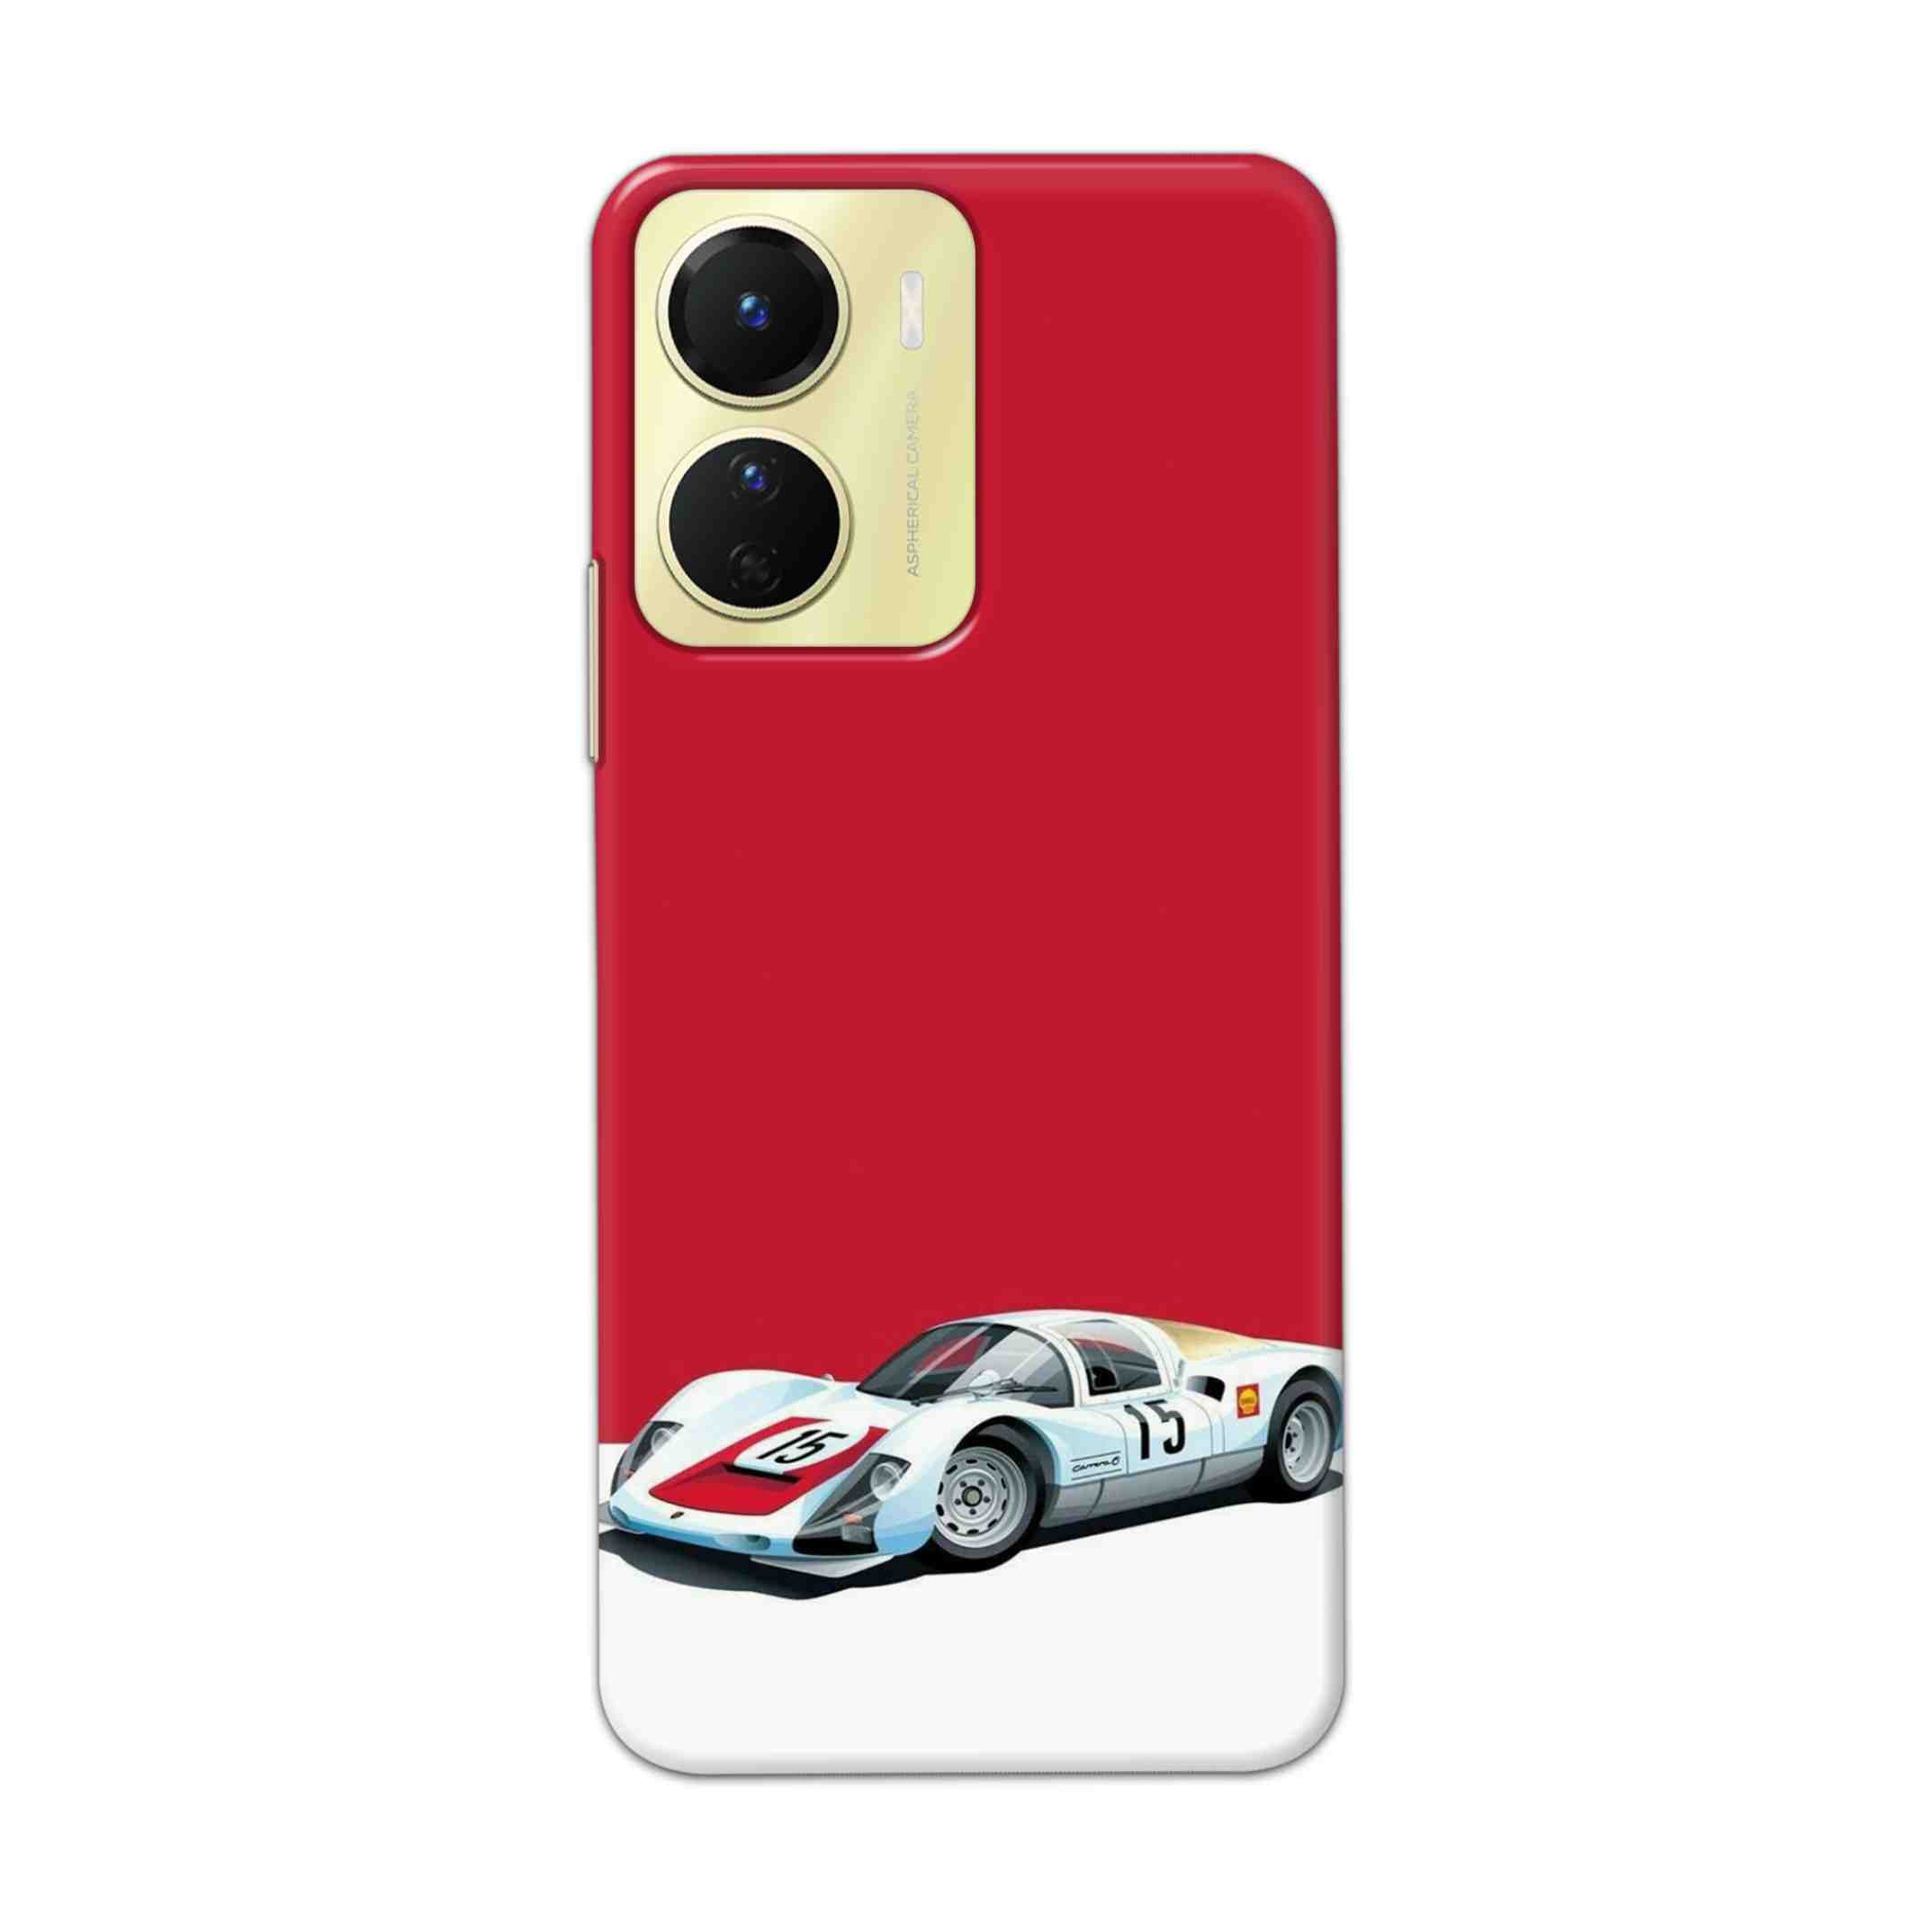 Buy Ferrari F15 Hard Back Mobile Phone Case Cover For Vivo Y16 Online